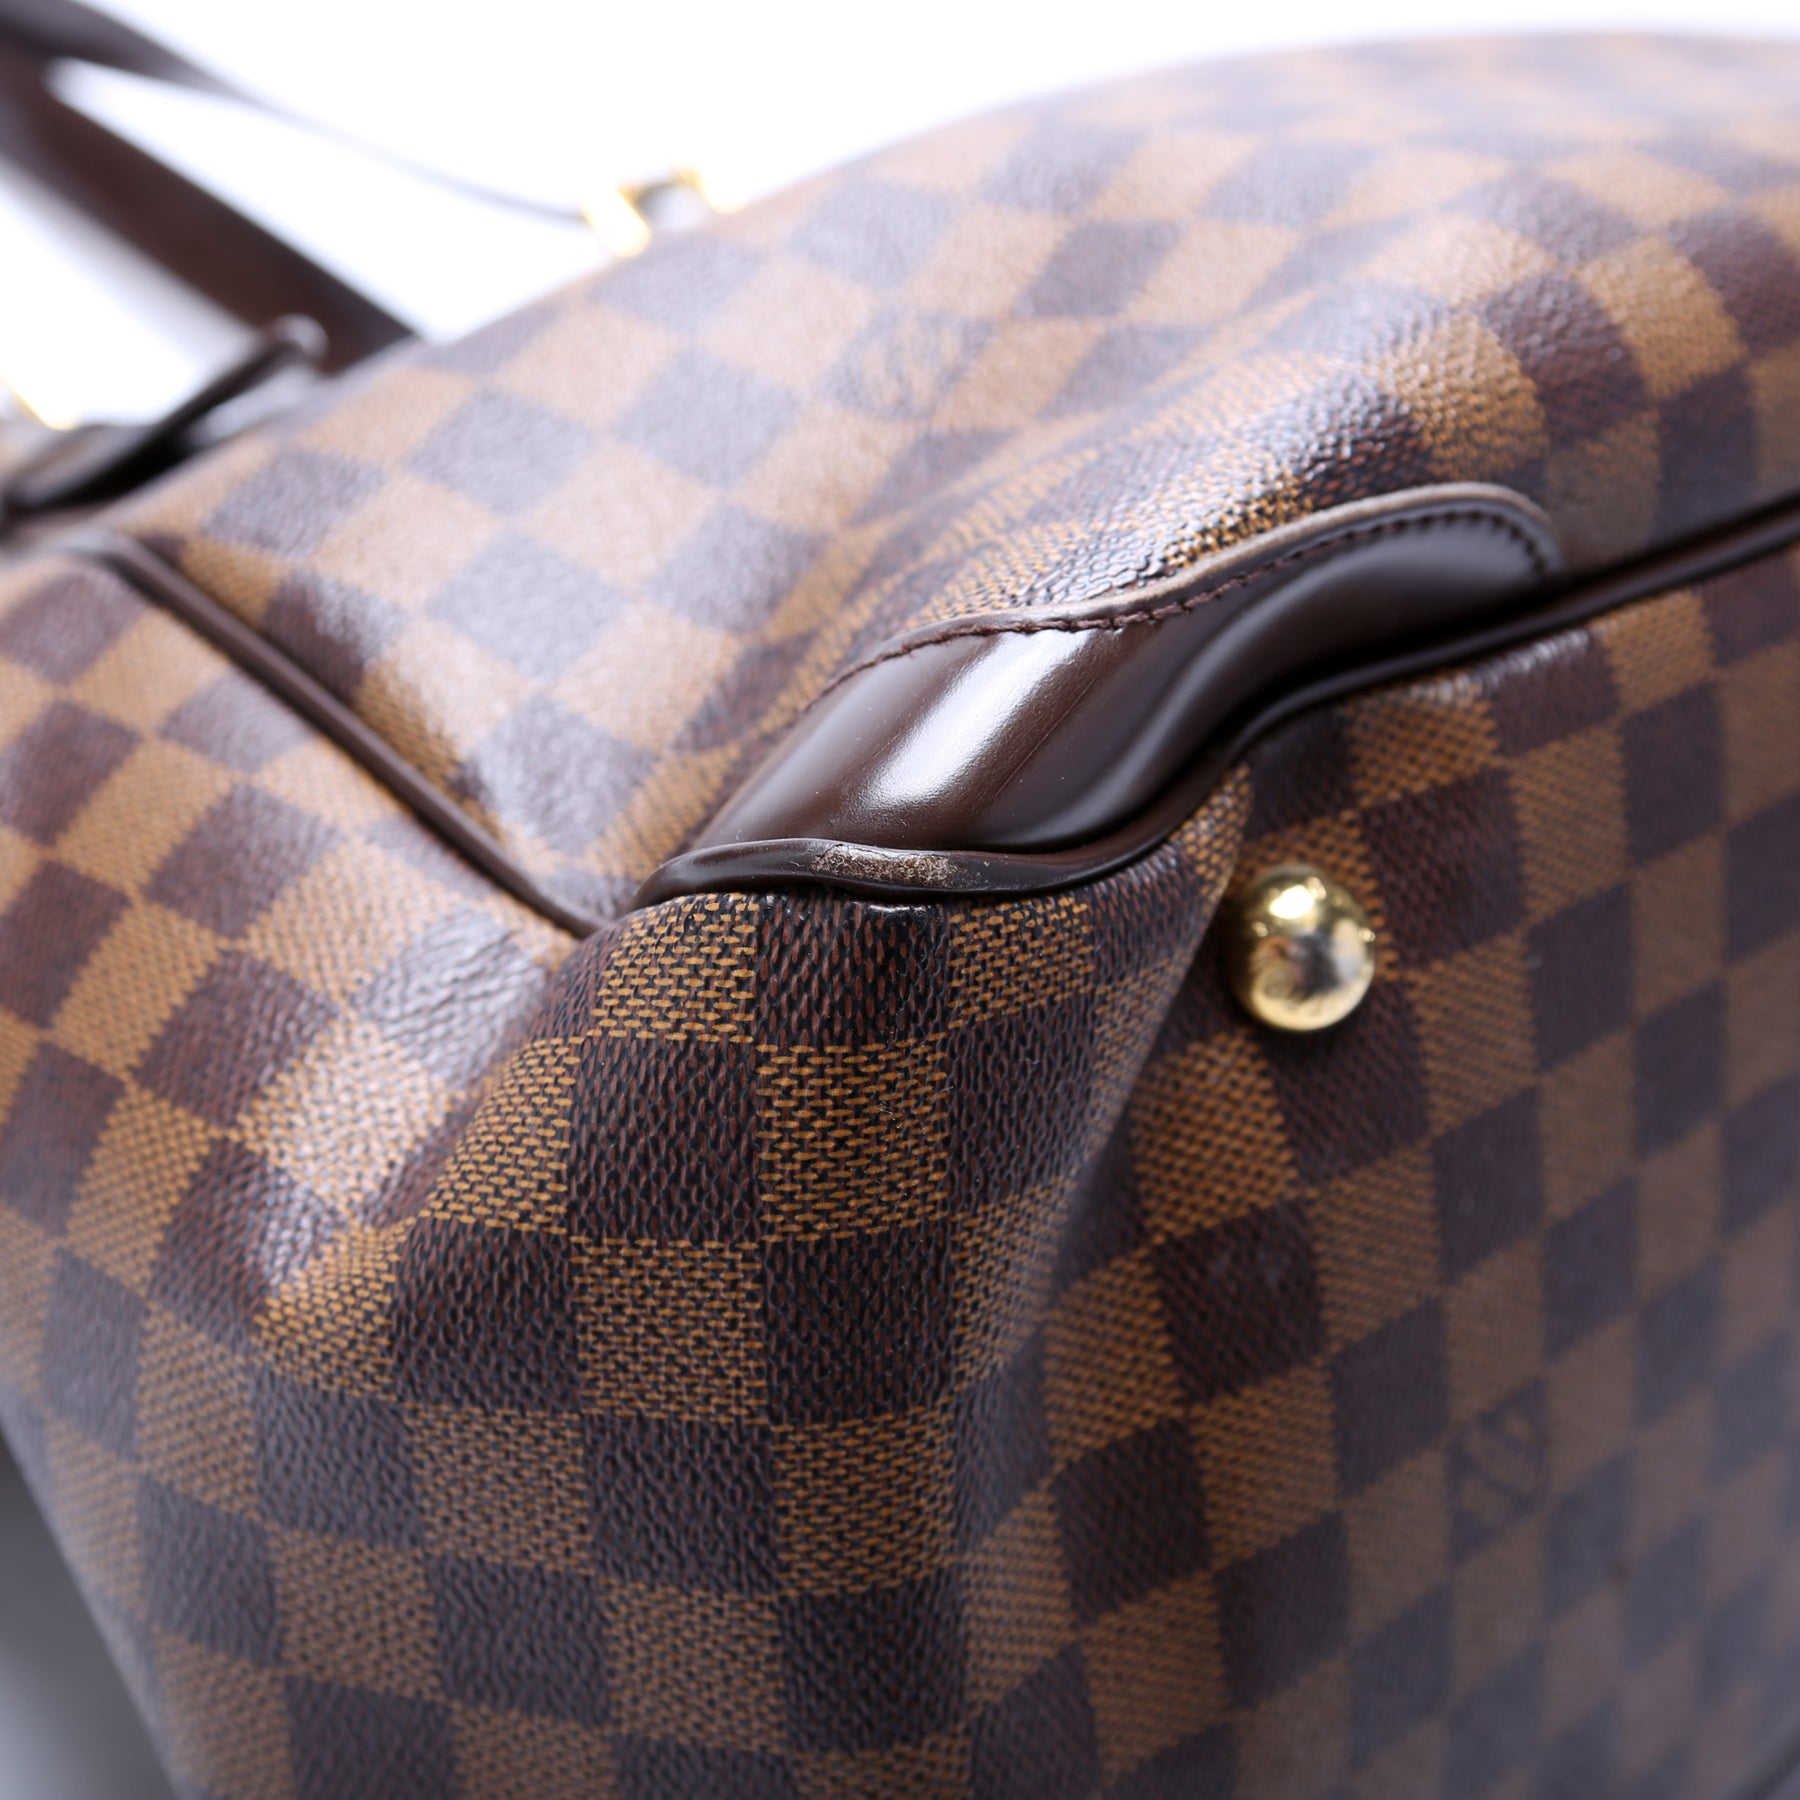 Louis Vuitton Damier Ebene Verona GM Shoulder Bag pre-owned